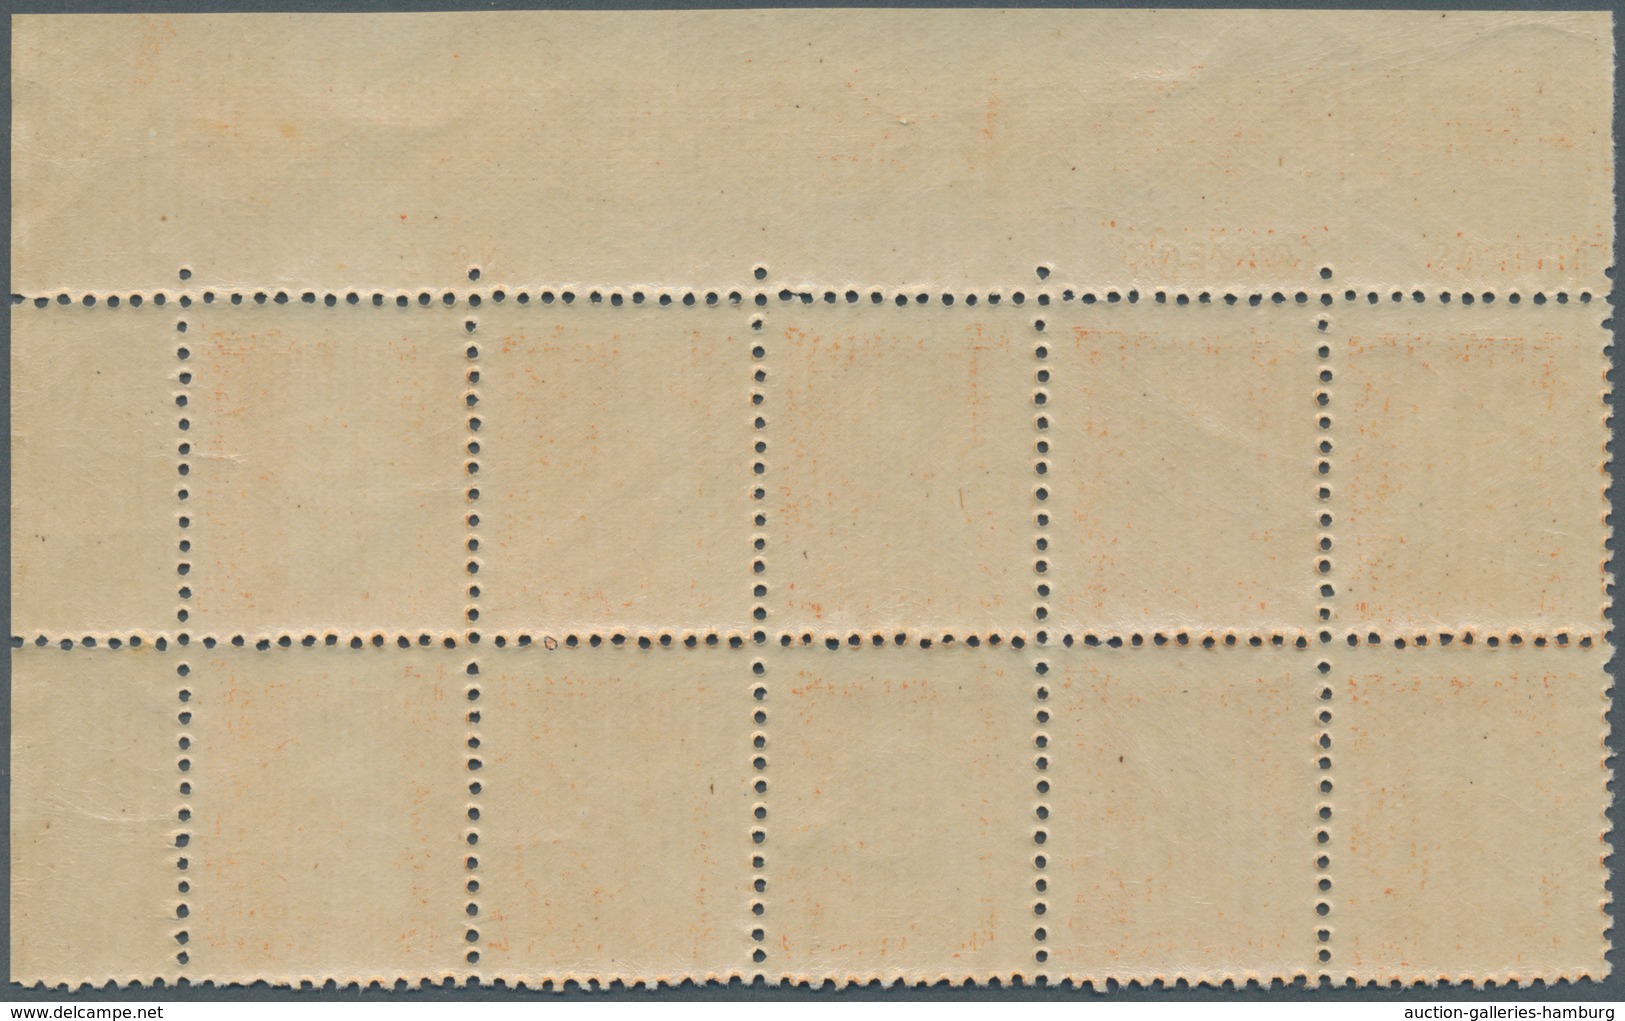 Spanien: 1938, Fermin Salvochea y Alvarez 60c. orange four blocks of ten from upper right corners wi